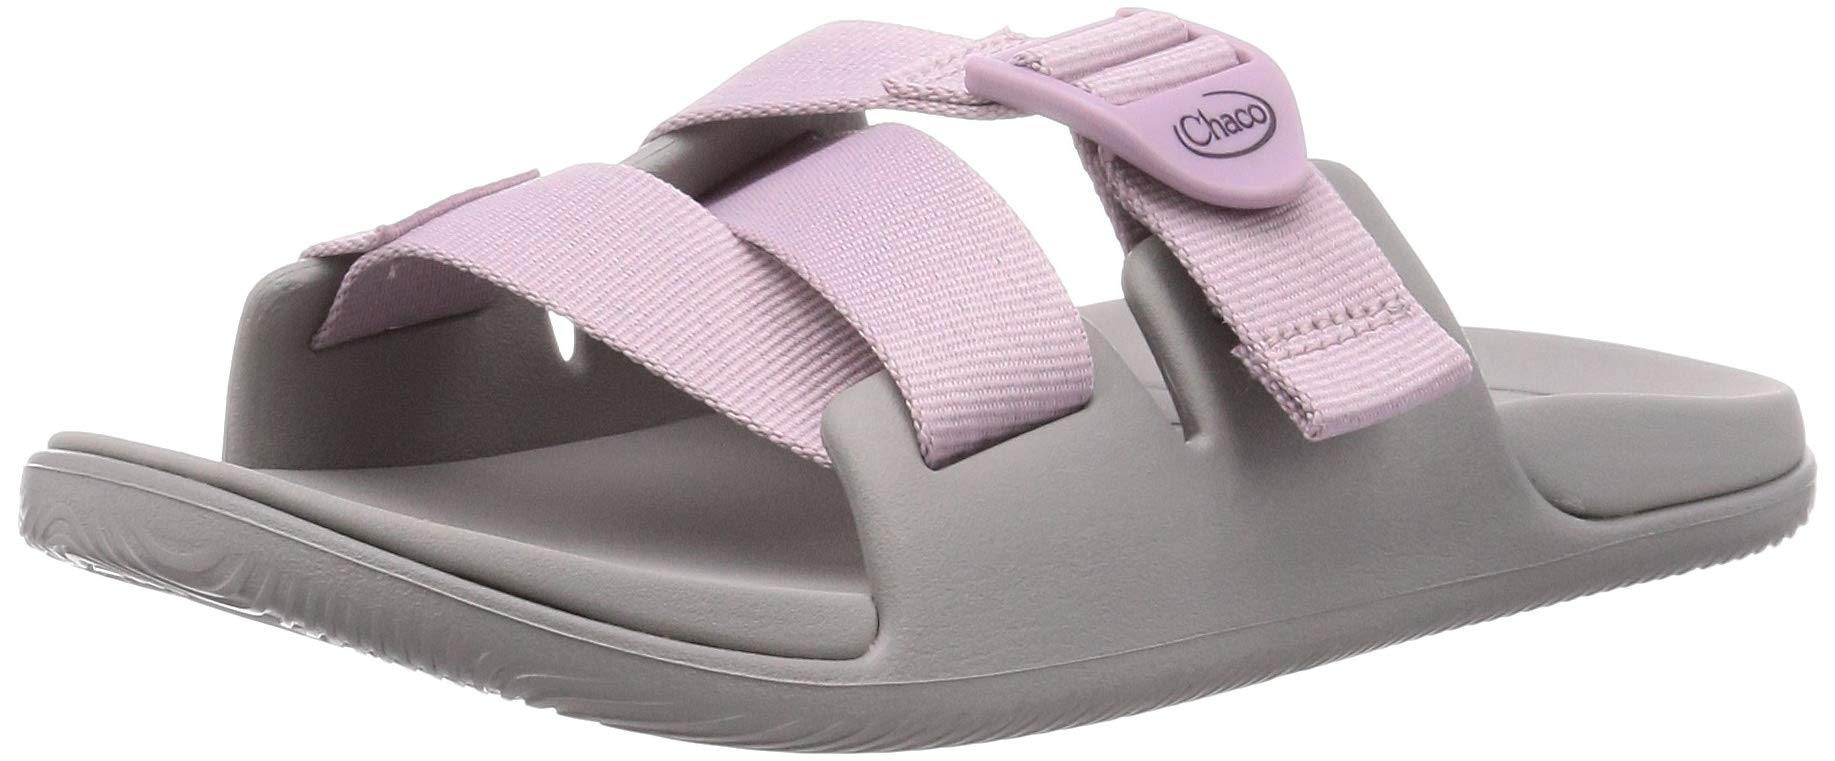 chaco Womens cHILLOS Slide Sandal, Solid Mauve, 5